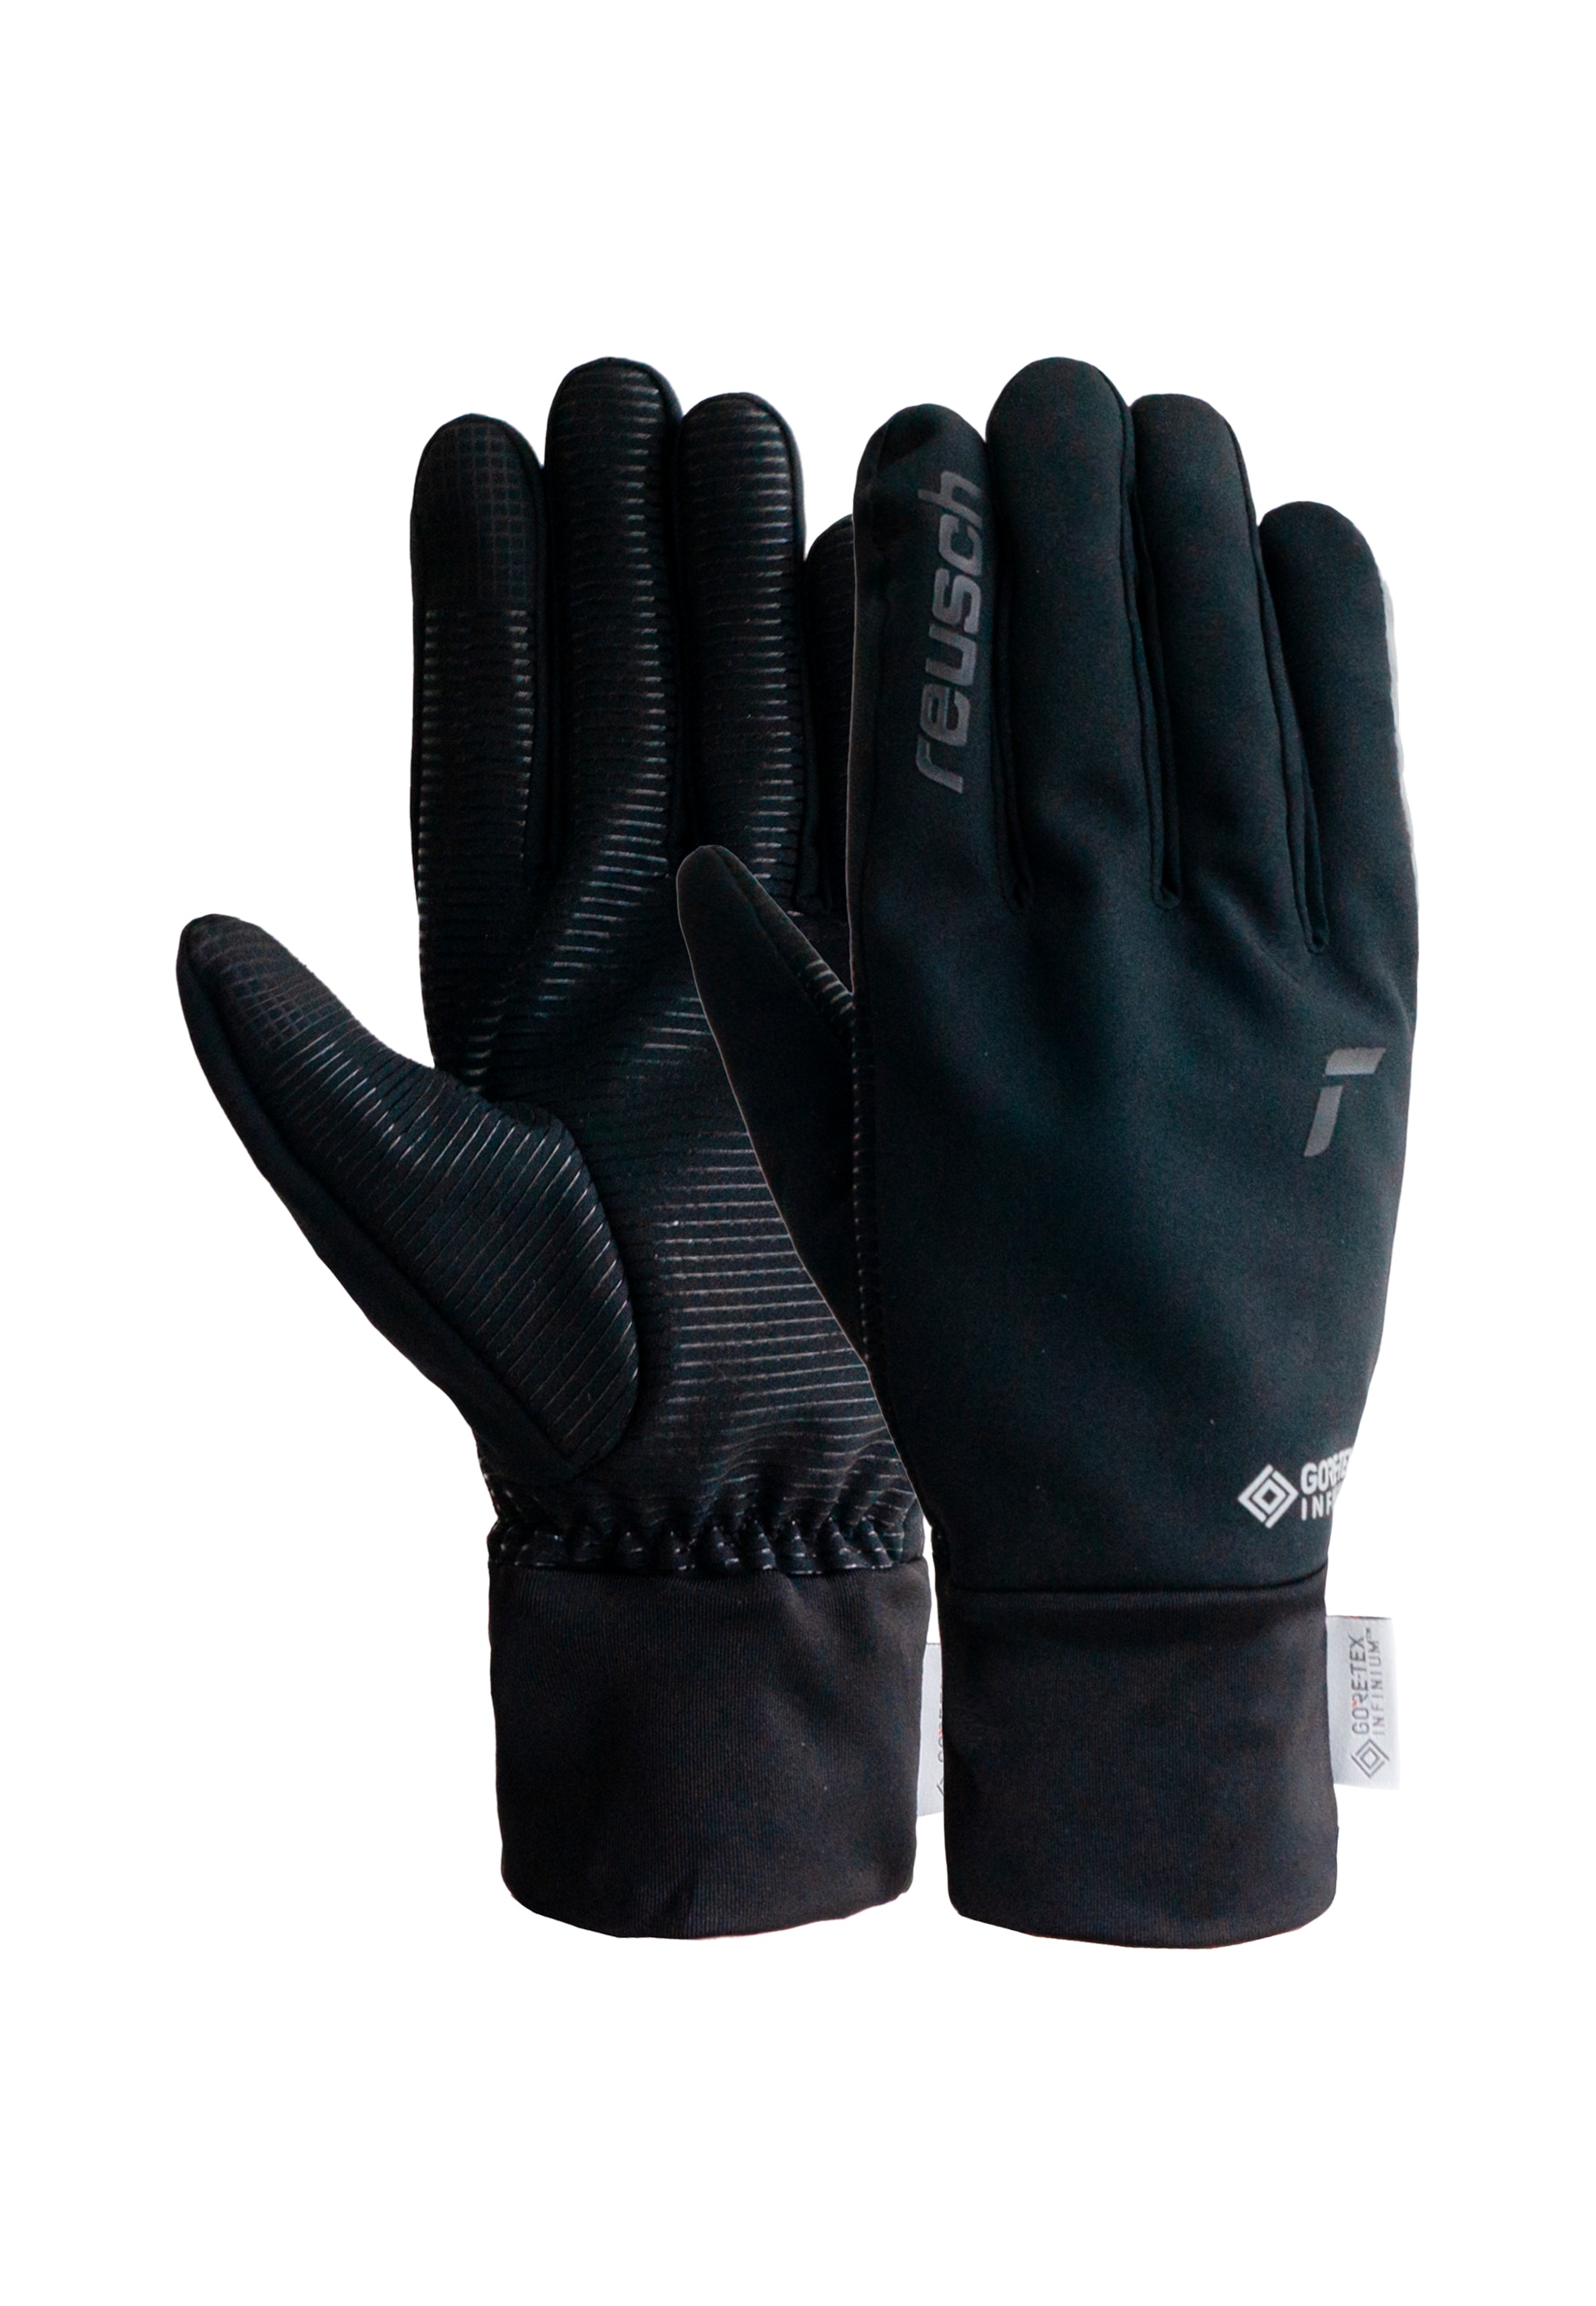 Reusch Laufhandschuhe »Multisport Glove GORE-TEX INFINIUM TOUCH«, mit Touchscreen-Funktion